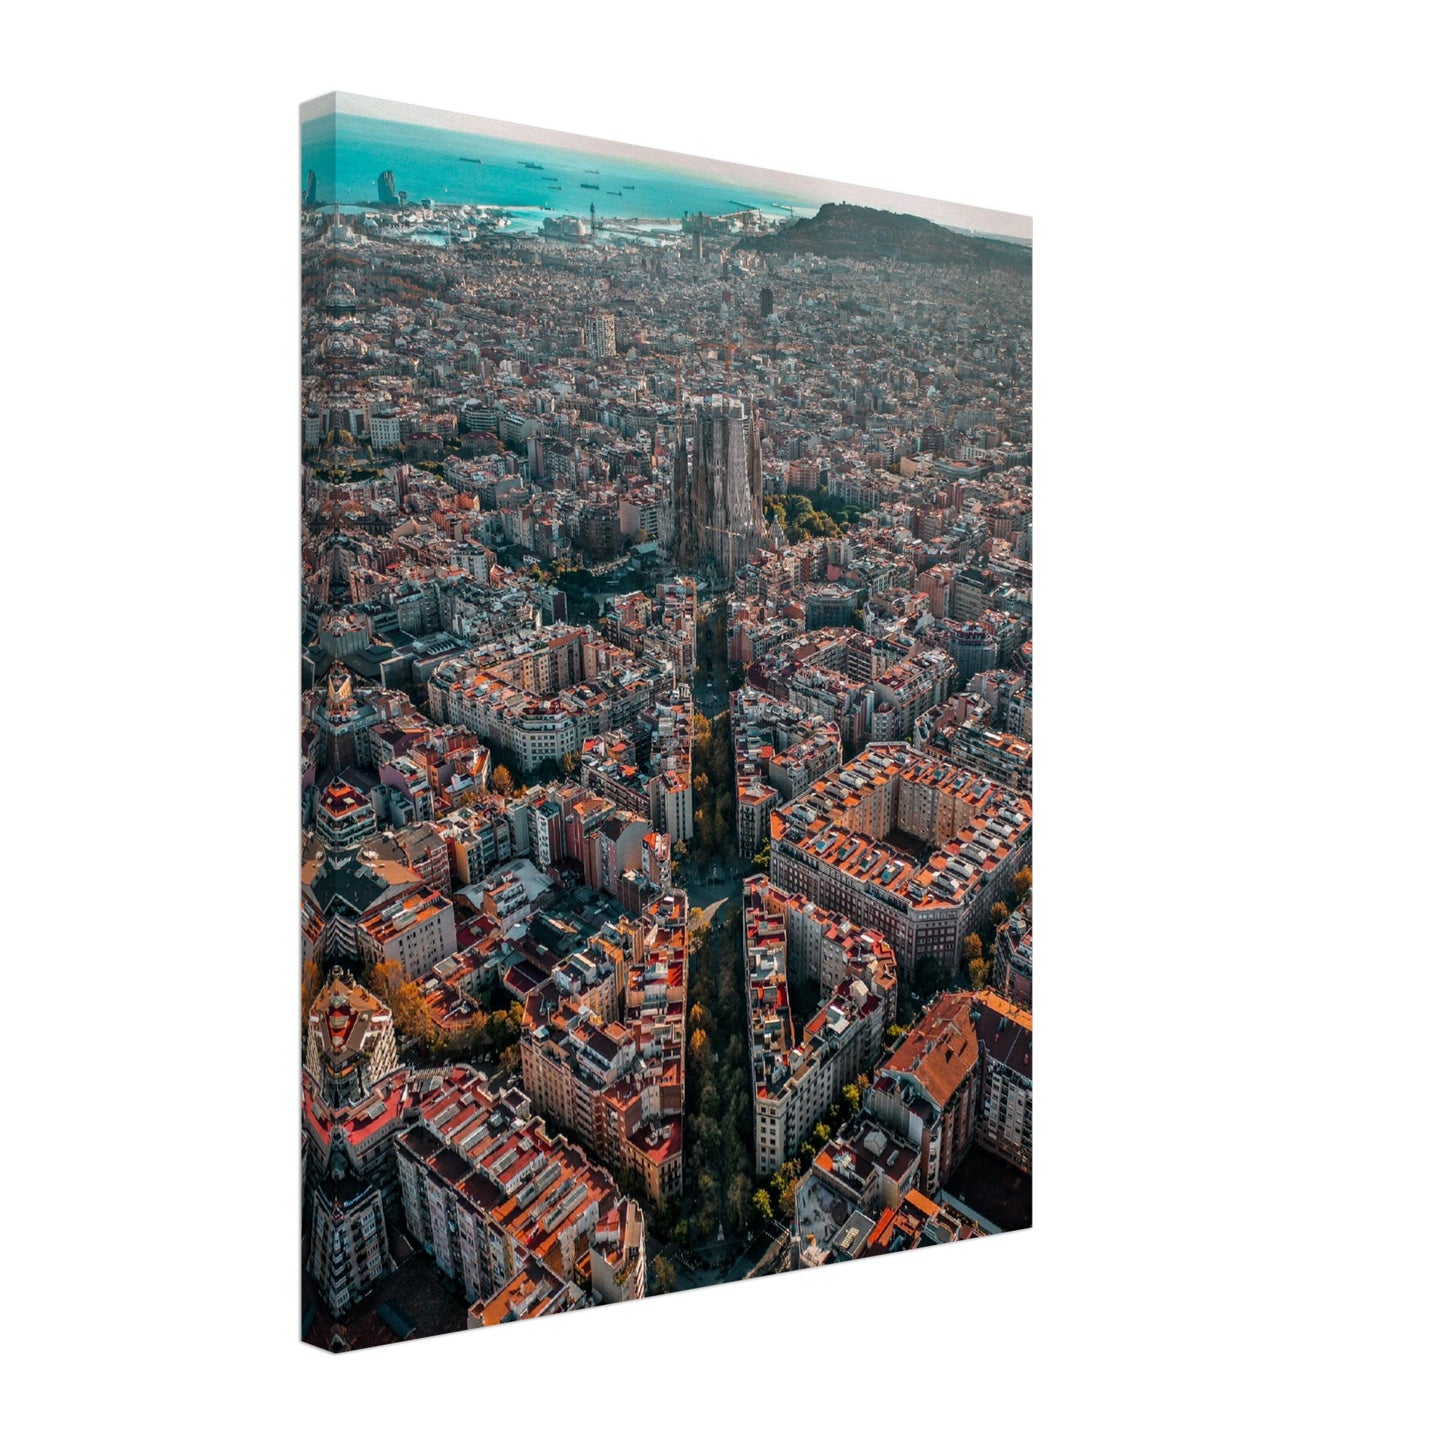 Barcelona City Canvas